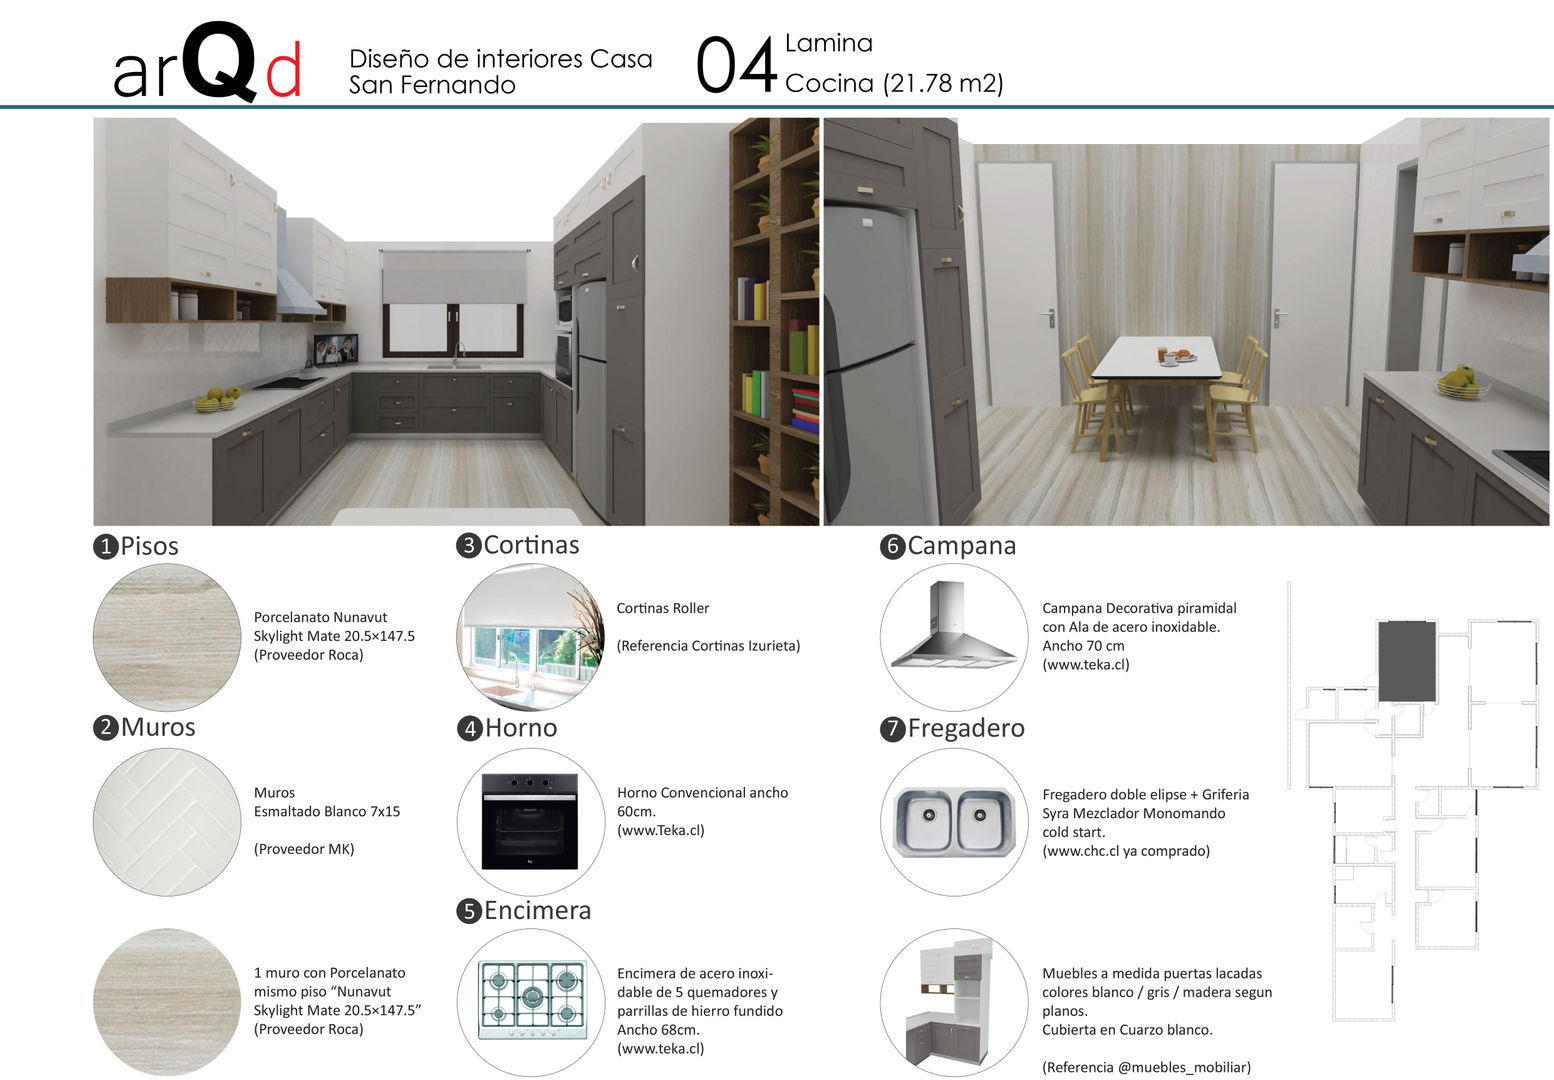 Cocina ARQD spa Muebles de cocinas cocina,proyecto cocina,mobiliario cocina,diseño interior